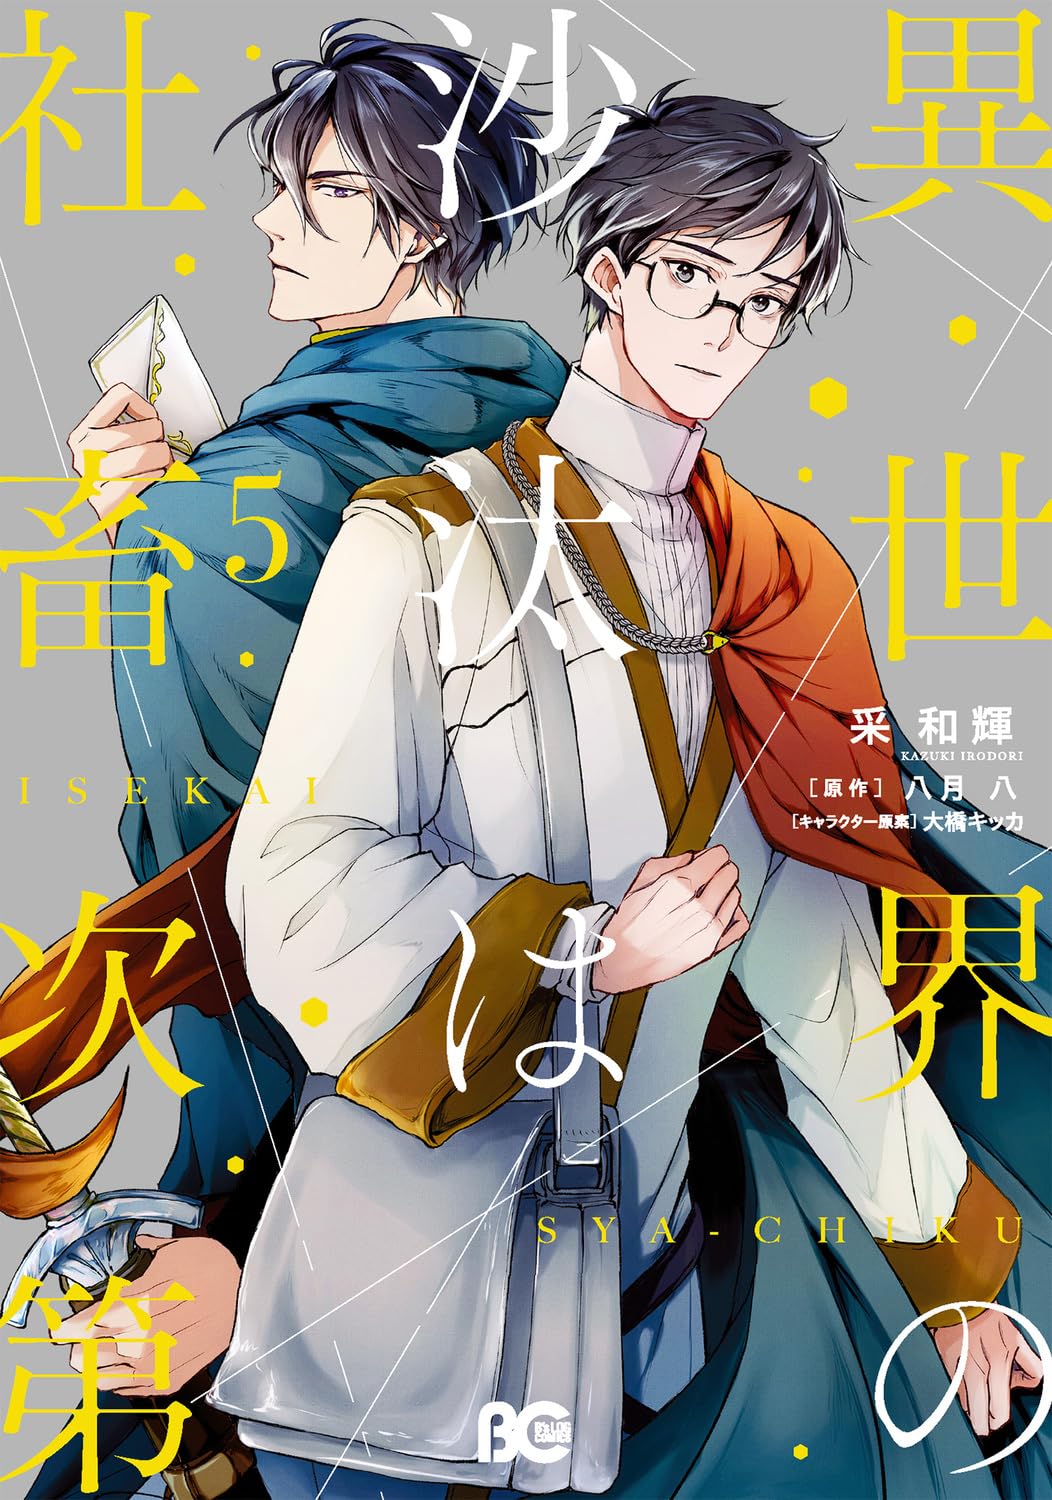 Manga Mogura RE on X: Light novel series Leadale no Daichi nite by Ceez,  Tenmaso has 1.2 million copies in circulation (including manga).   / X